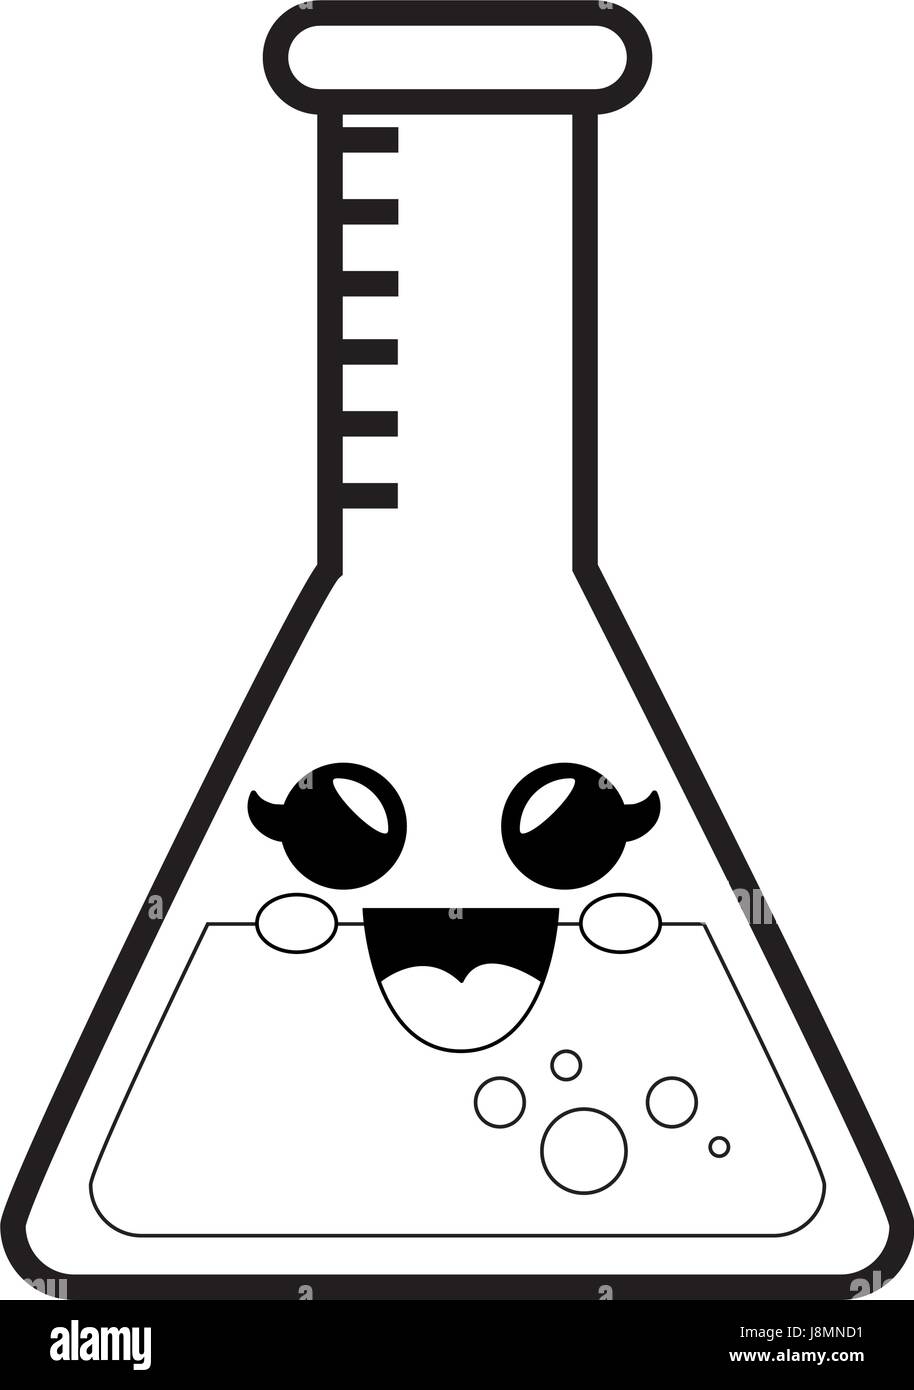 Chemie-Kolben Cartoon smiley Stock-Vektorgrafik - Alamy